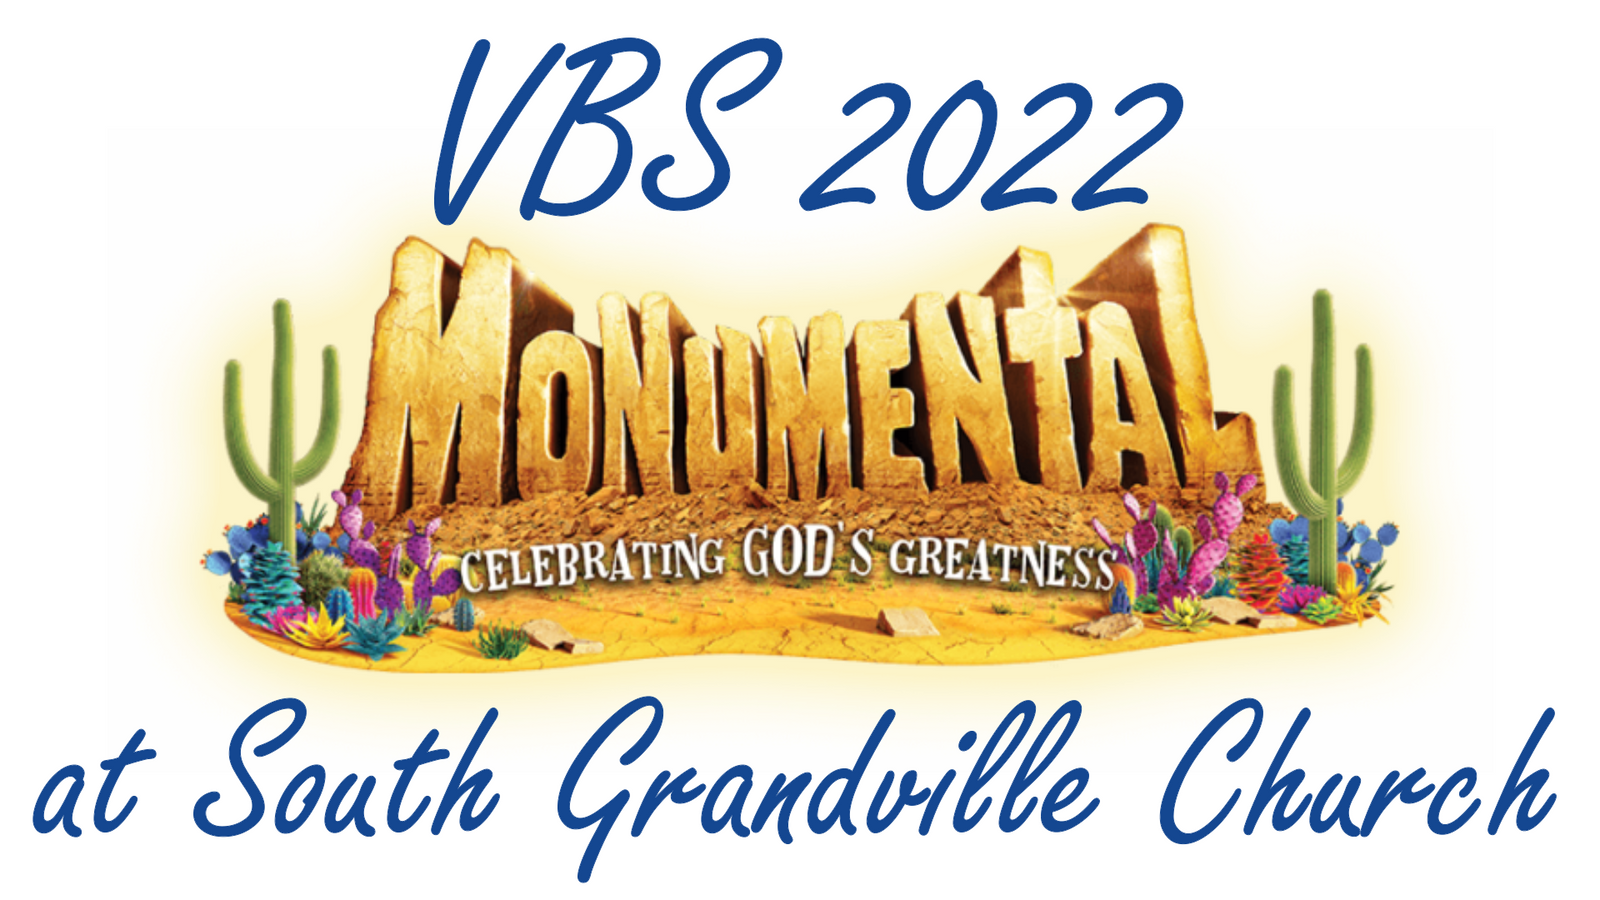 VBS 2022 Video